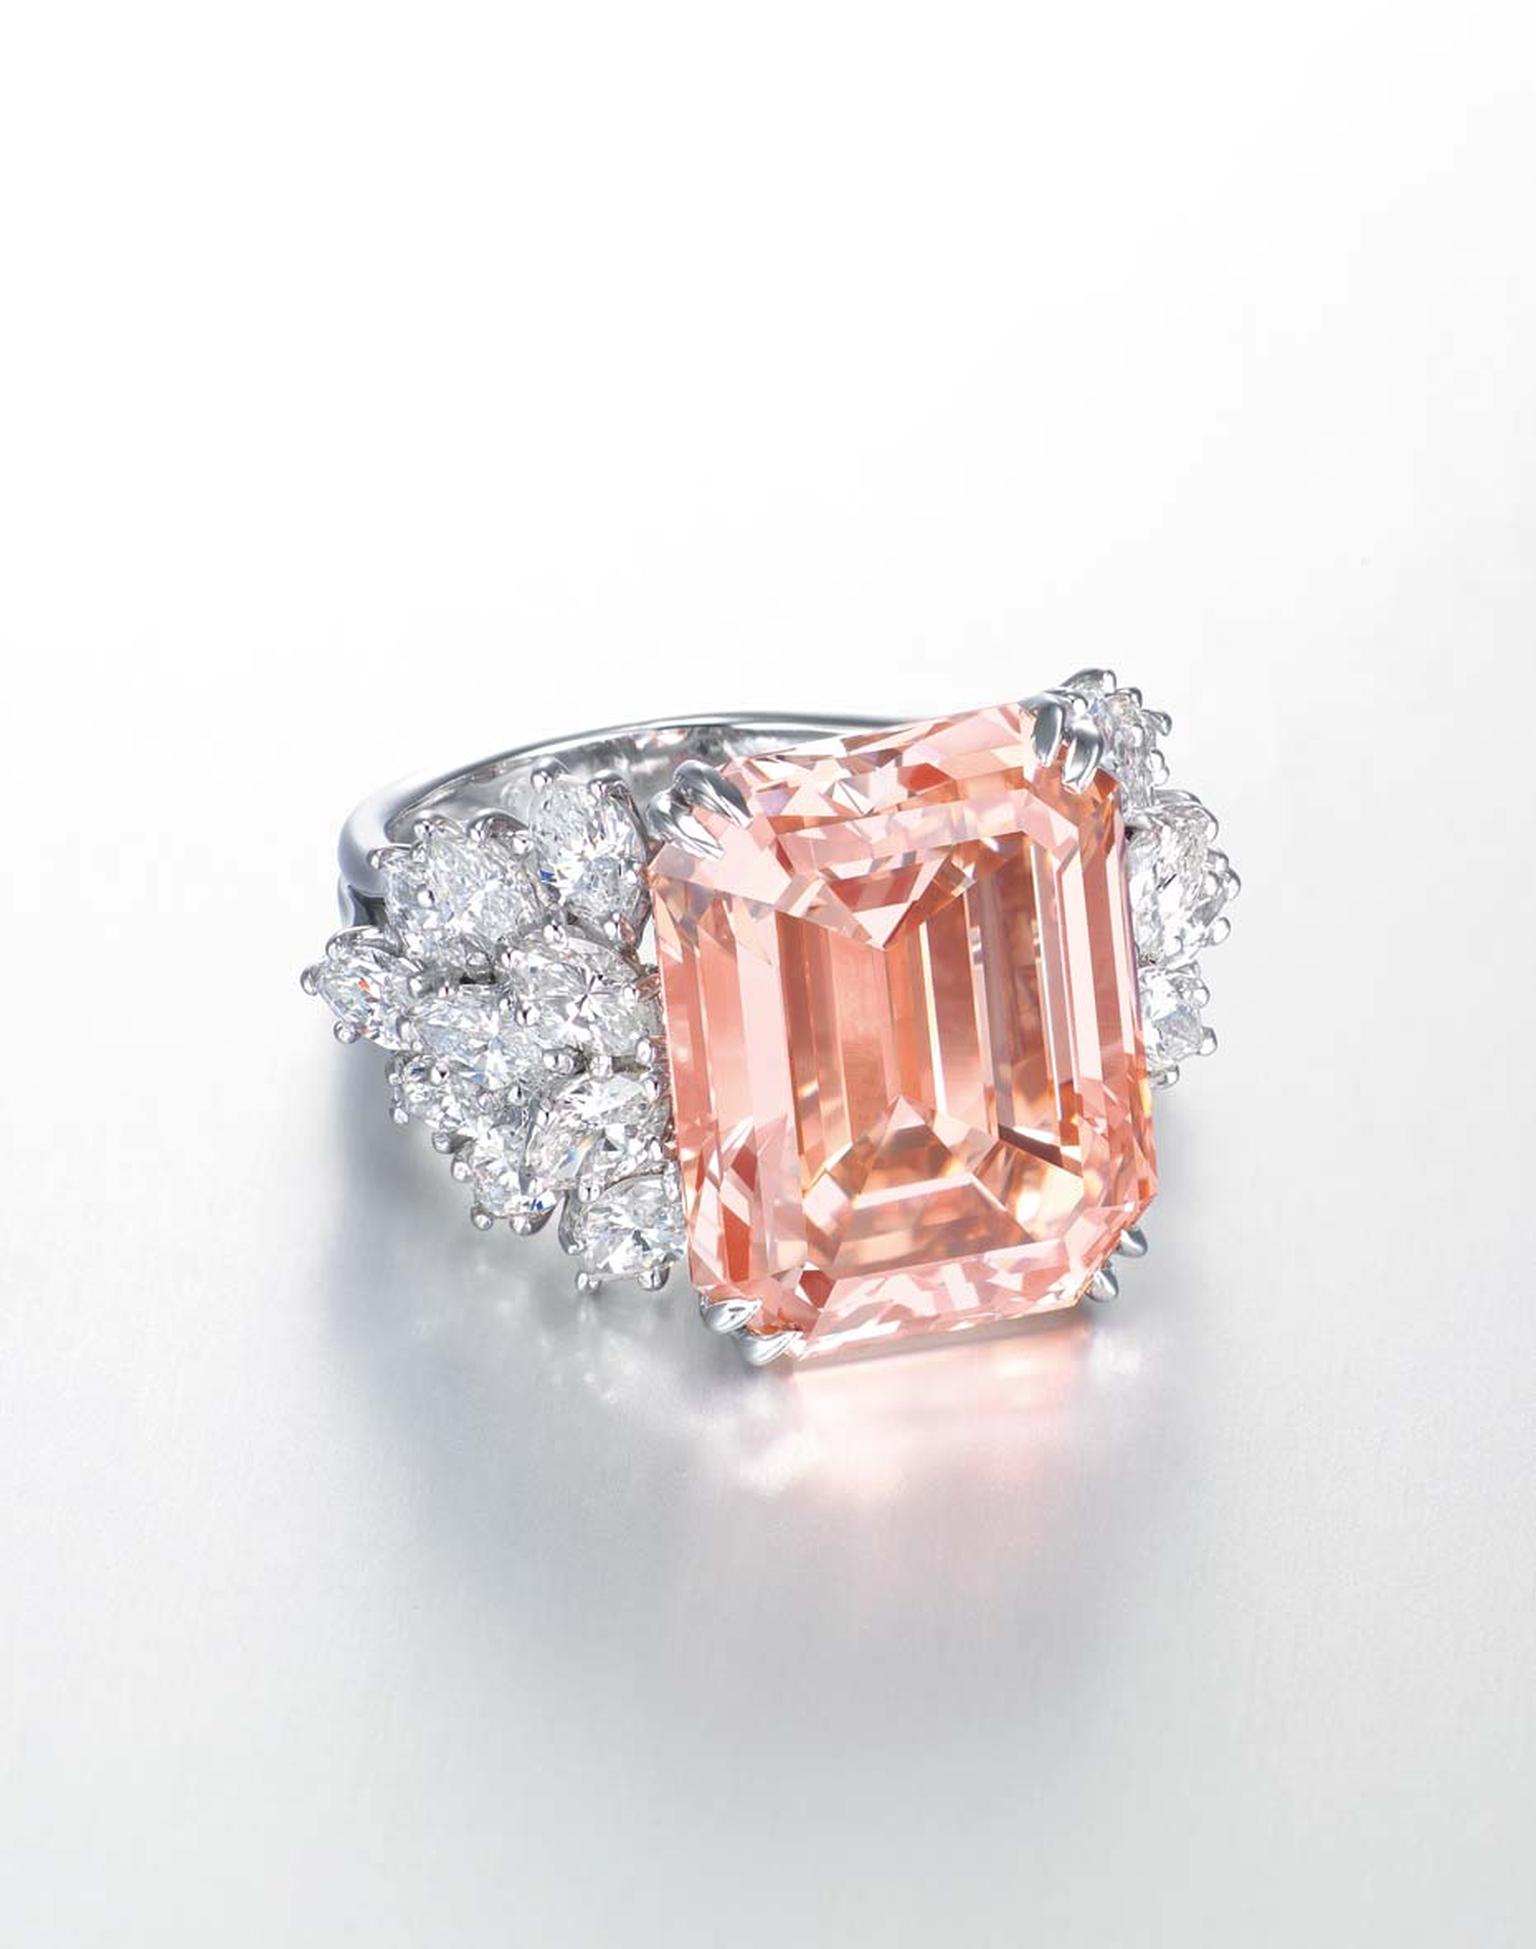 Harry Winston 12.93ct orangey-pink diamond ring (estimate: US$1.6-2.5 million)